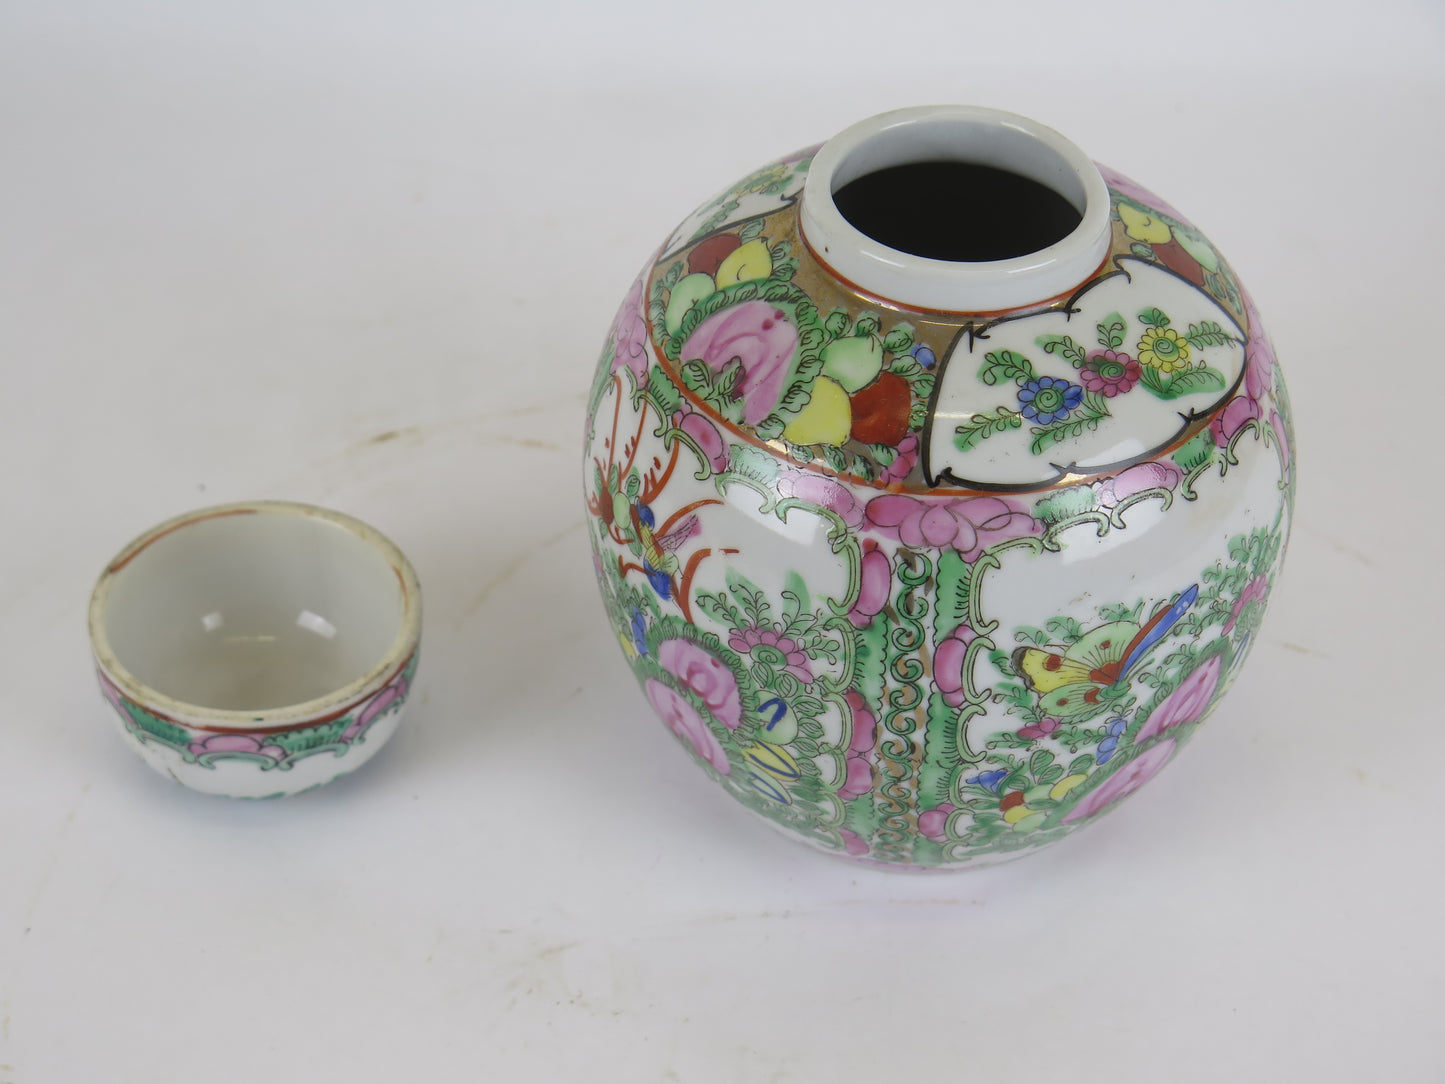 Vecchio vaso in porcellana cinese Cina vintage decorativo dipinto mano boccia CM2